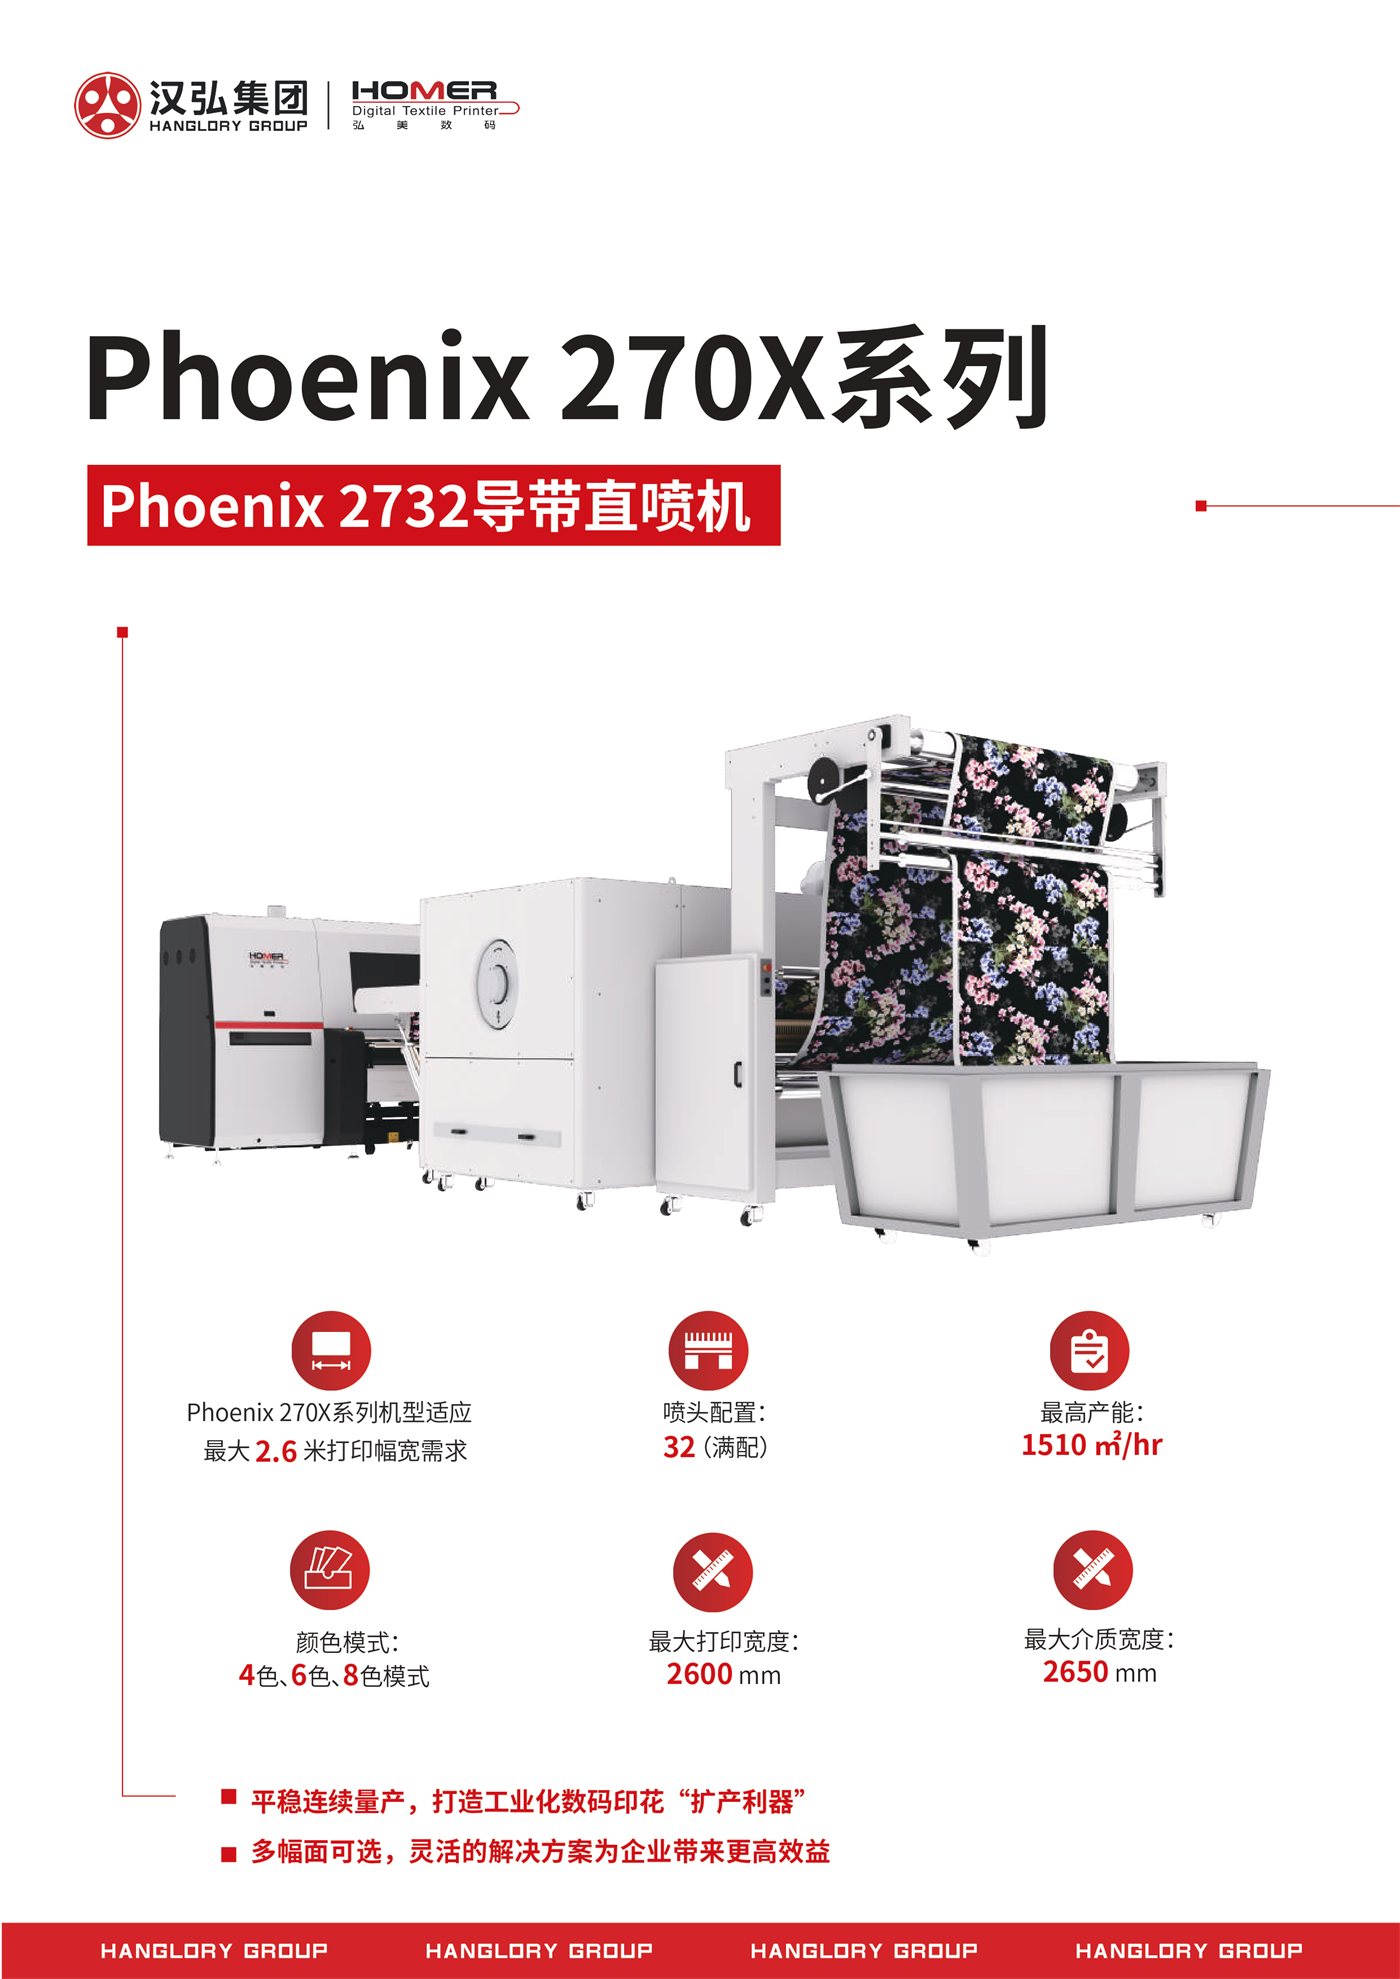 Phoenix 270X(图1)